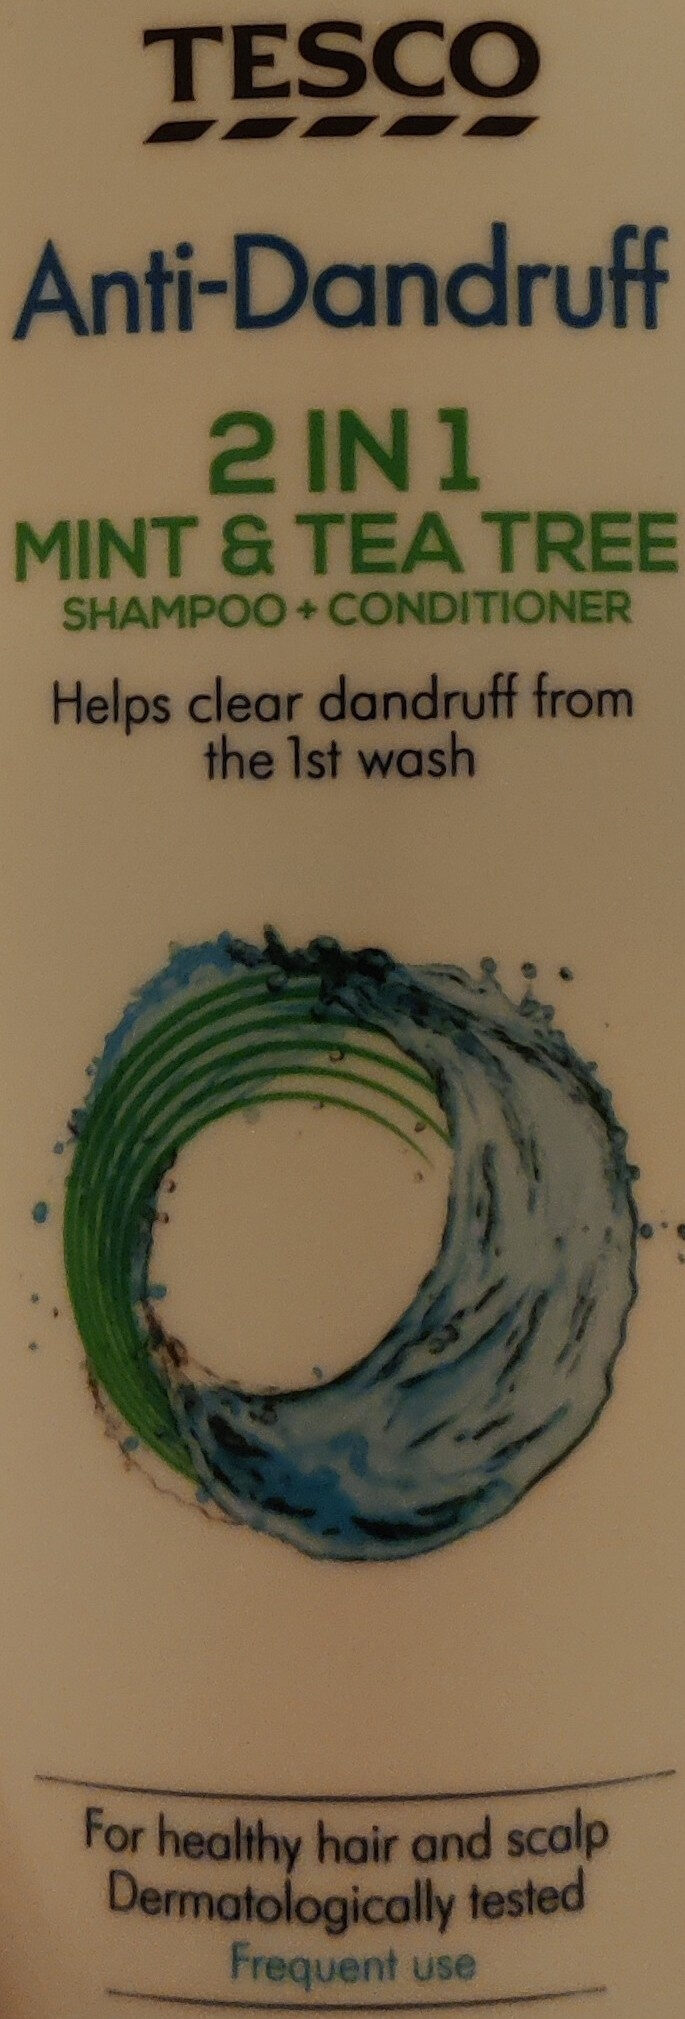 Anti-Dandruff 2 in 1 Mint & Tea Tree Shampoo + Conditioner - Product - en